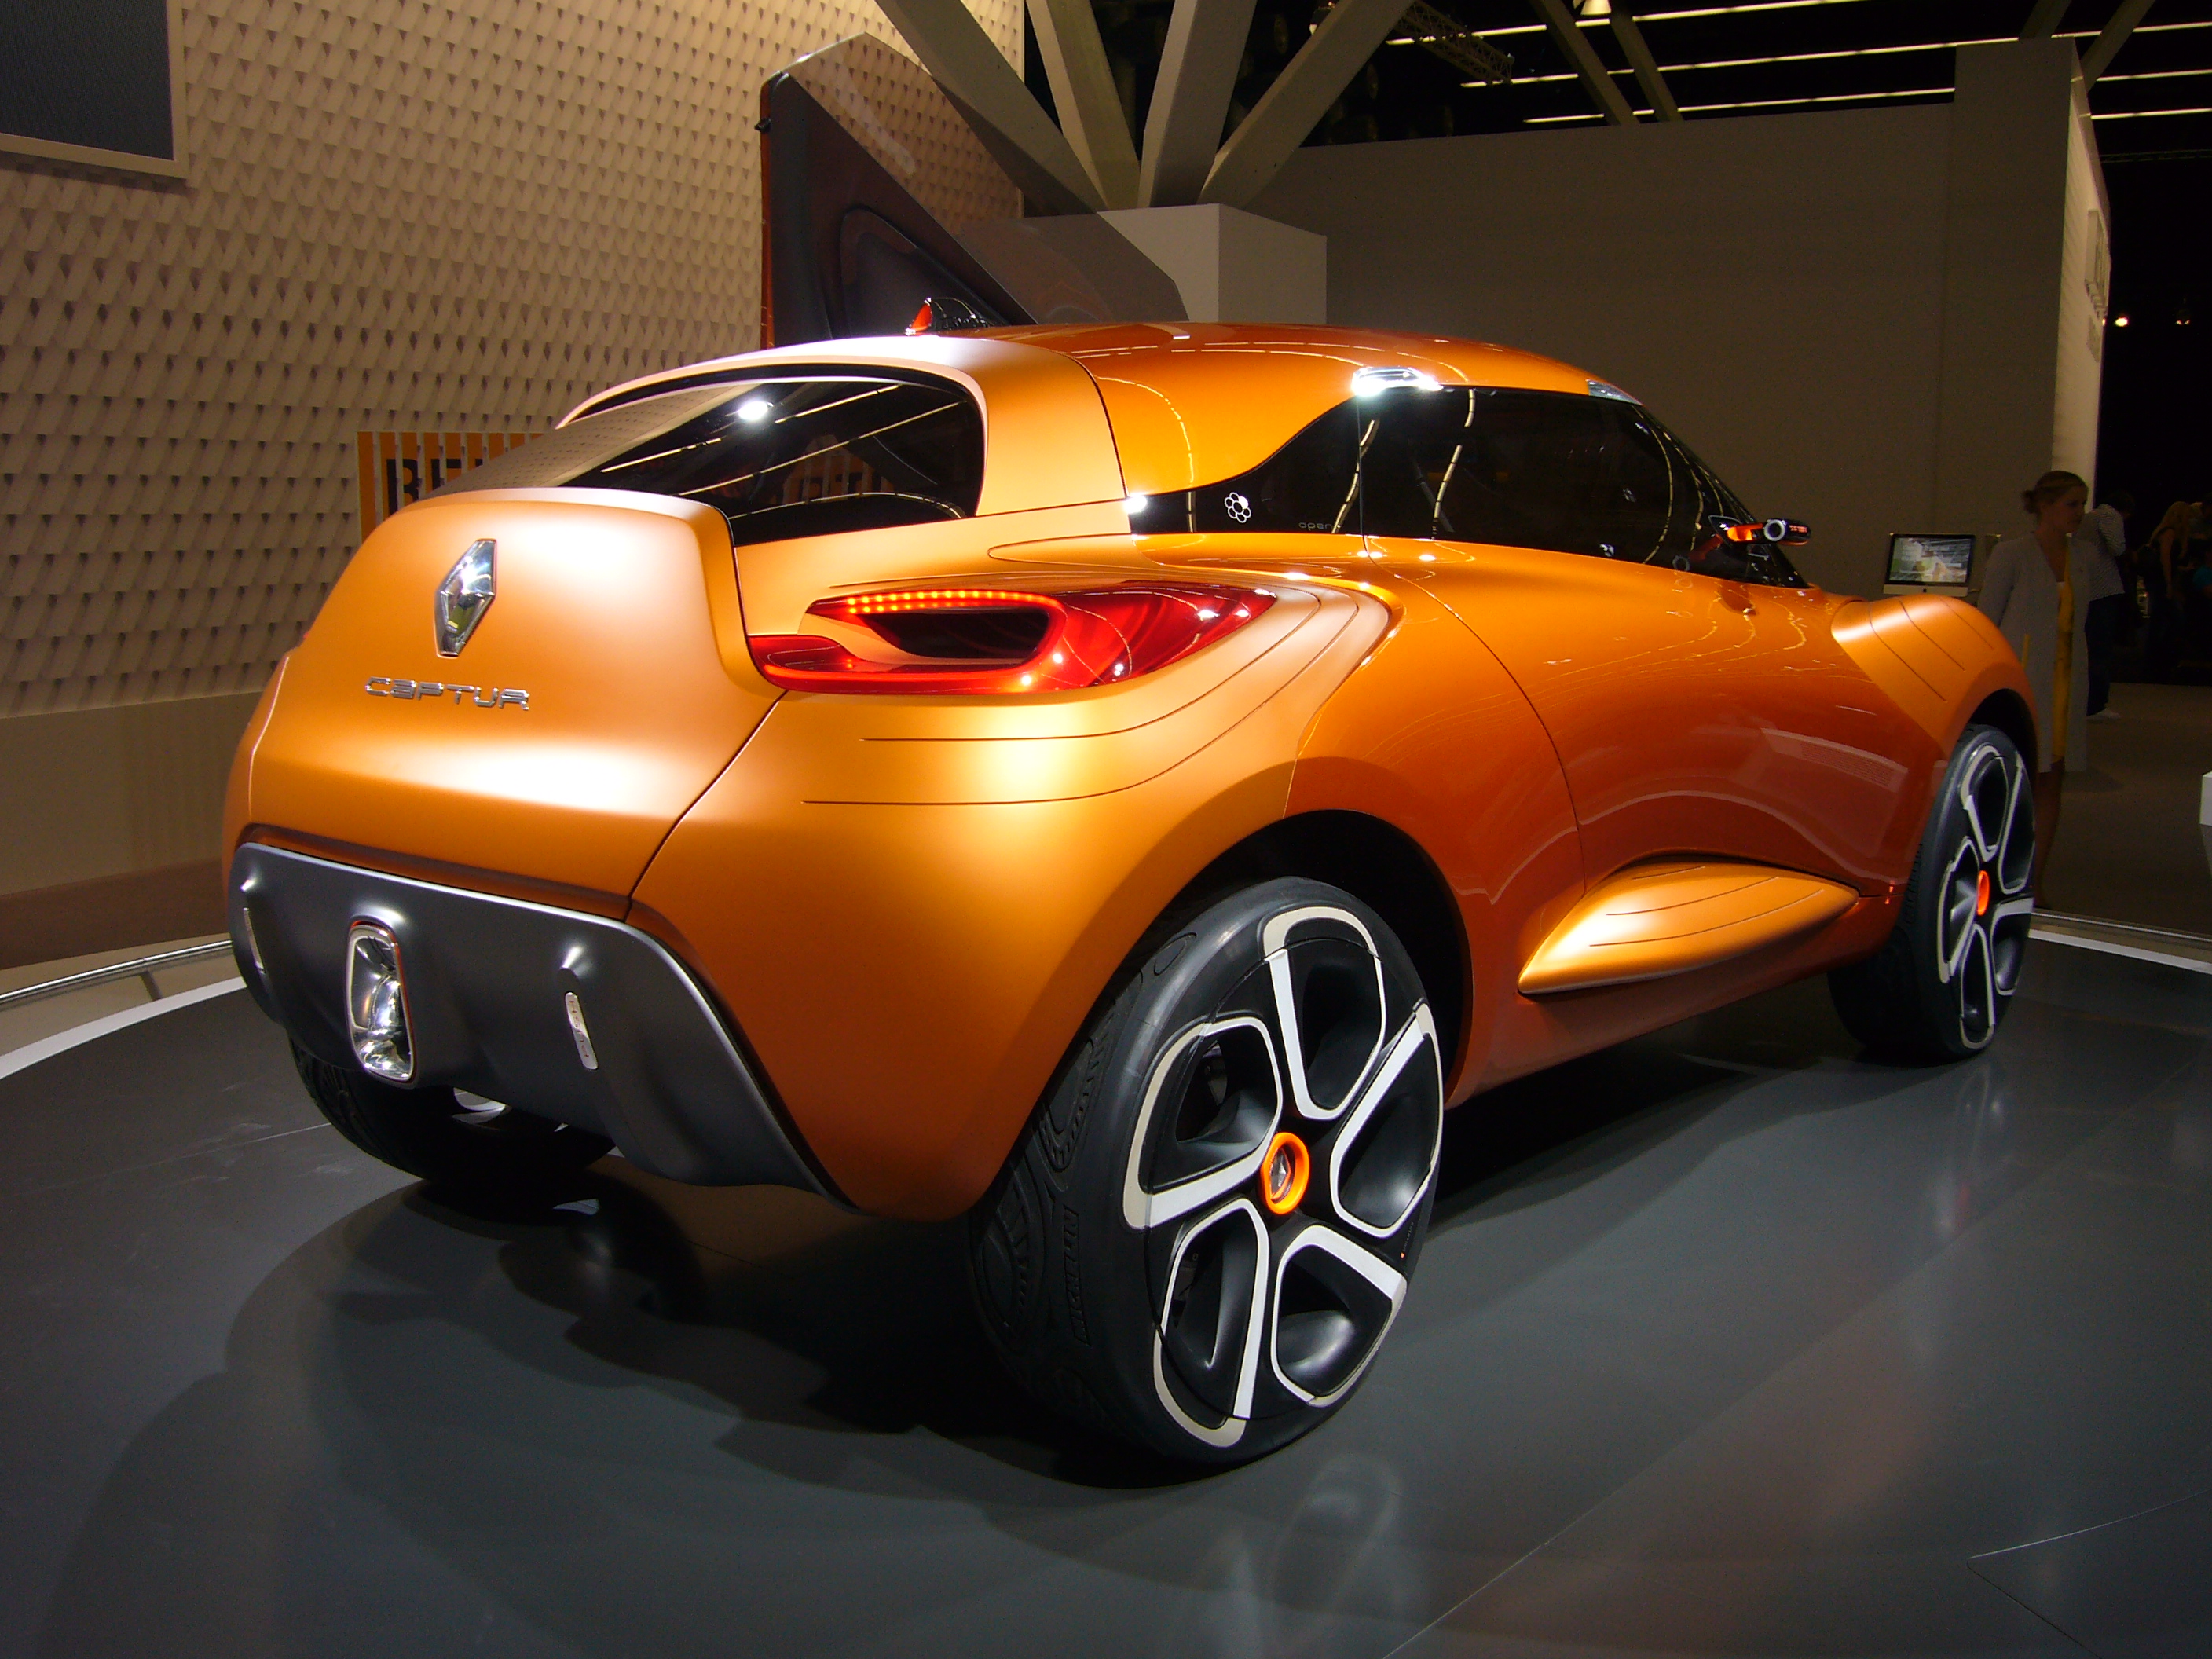 Renault Captur exterior model